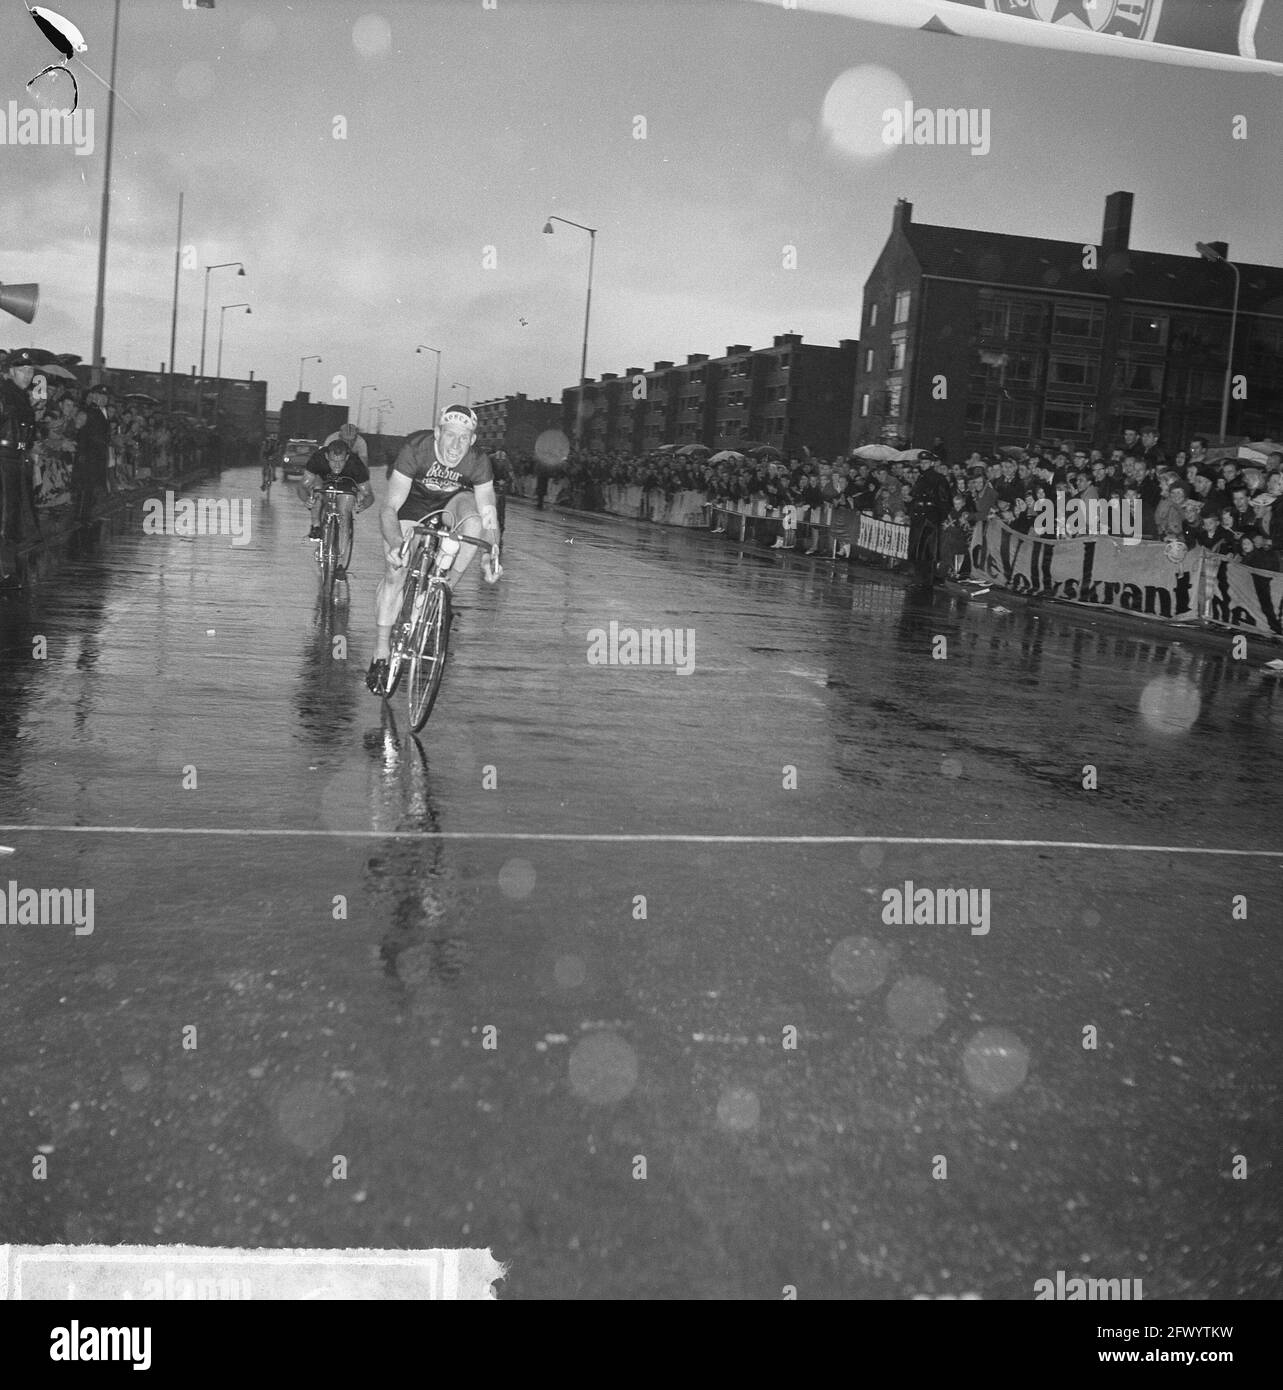 Ronde van Nederland, Piet van Est winner second stage from Heerenveen to Beverwijk, May 10, 1963, WIELRENNEN, Winners, stages, The Netherlands, 20th century press agency photo, news to remember, historic photography